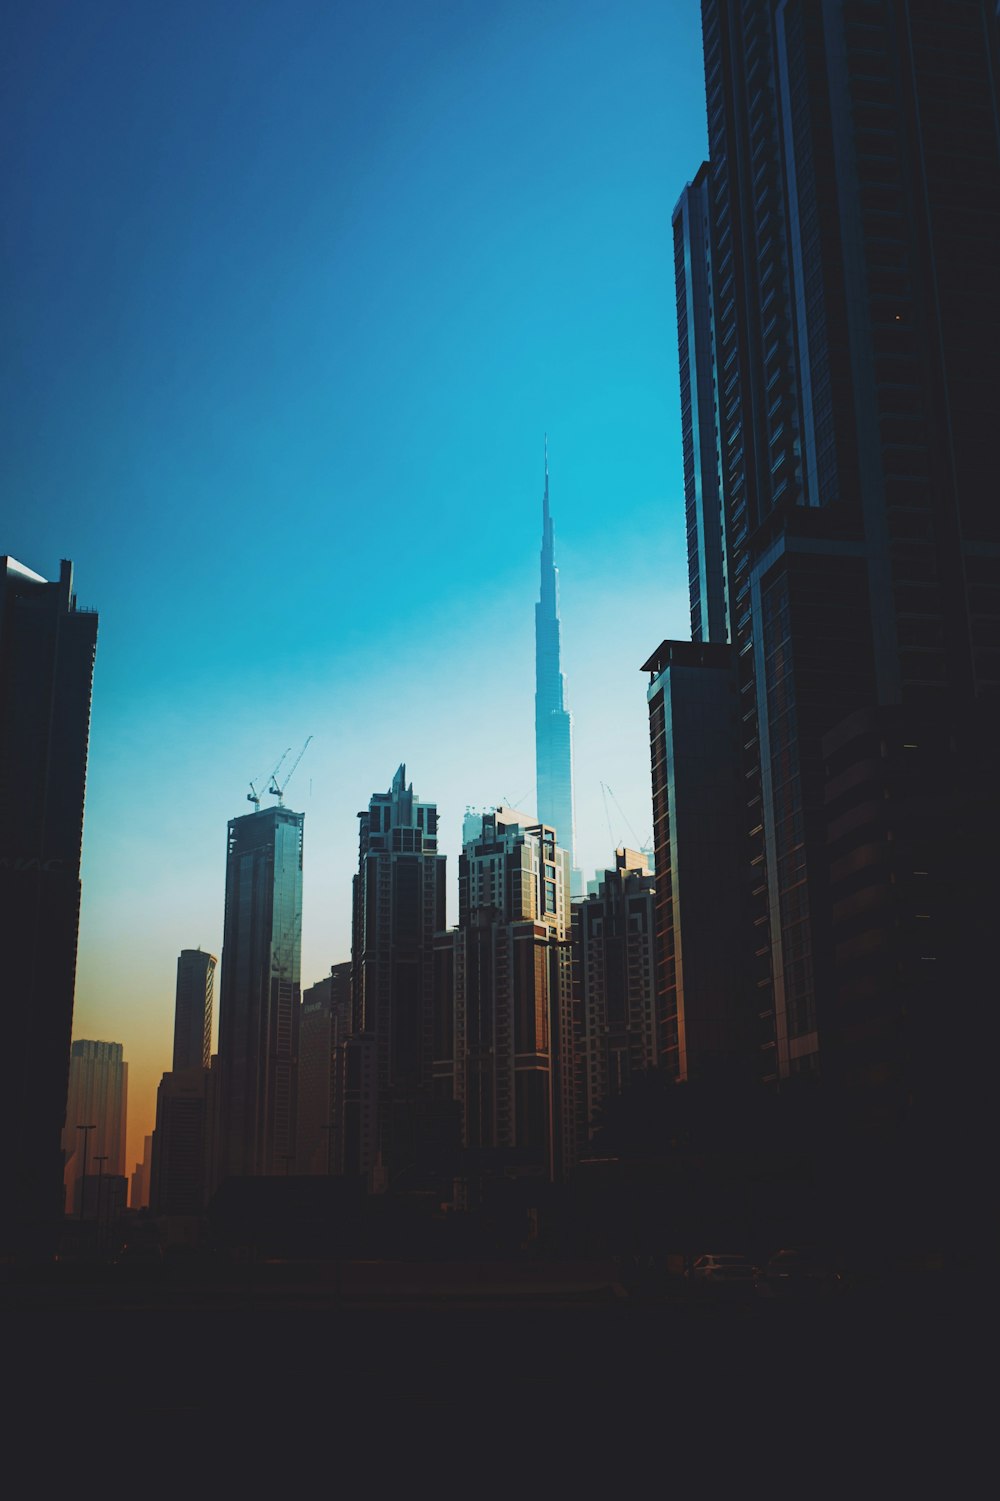 a city skyline with tall buildings and a blue sky